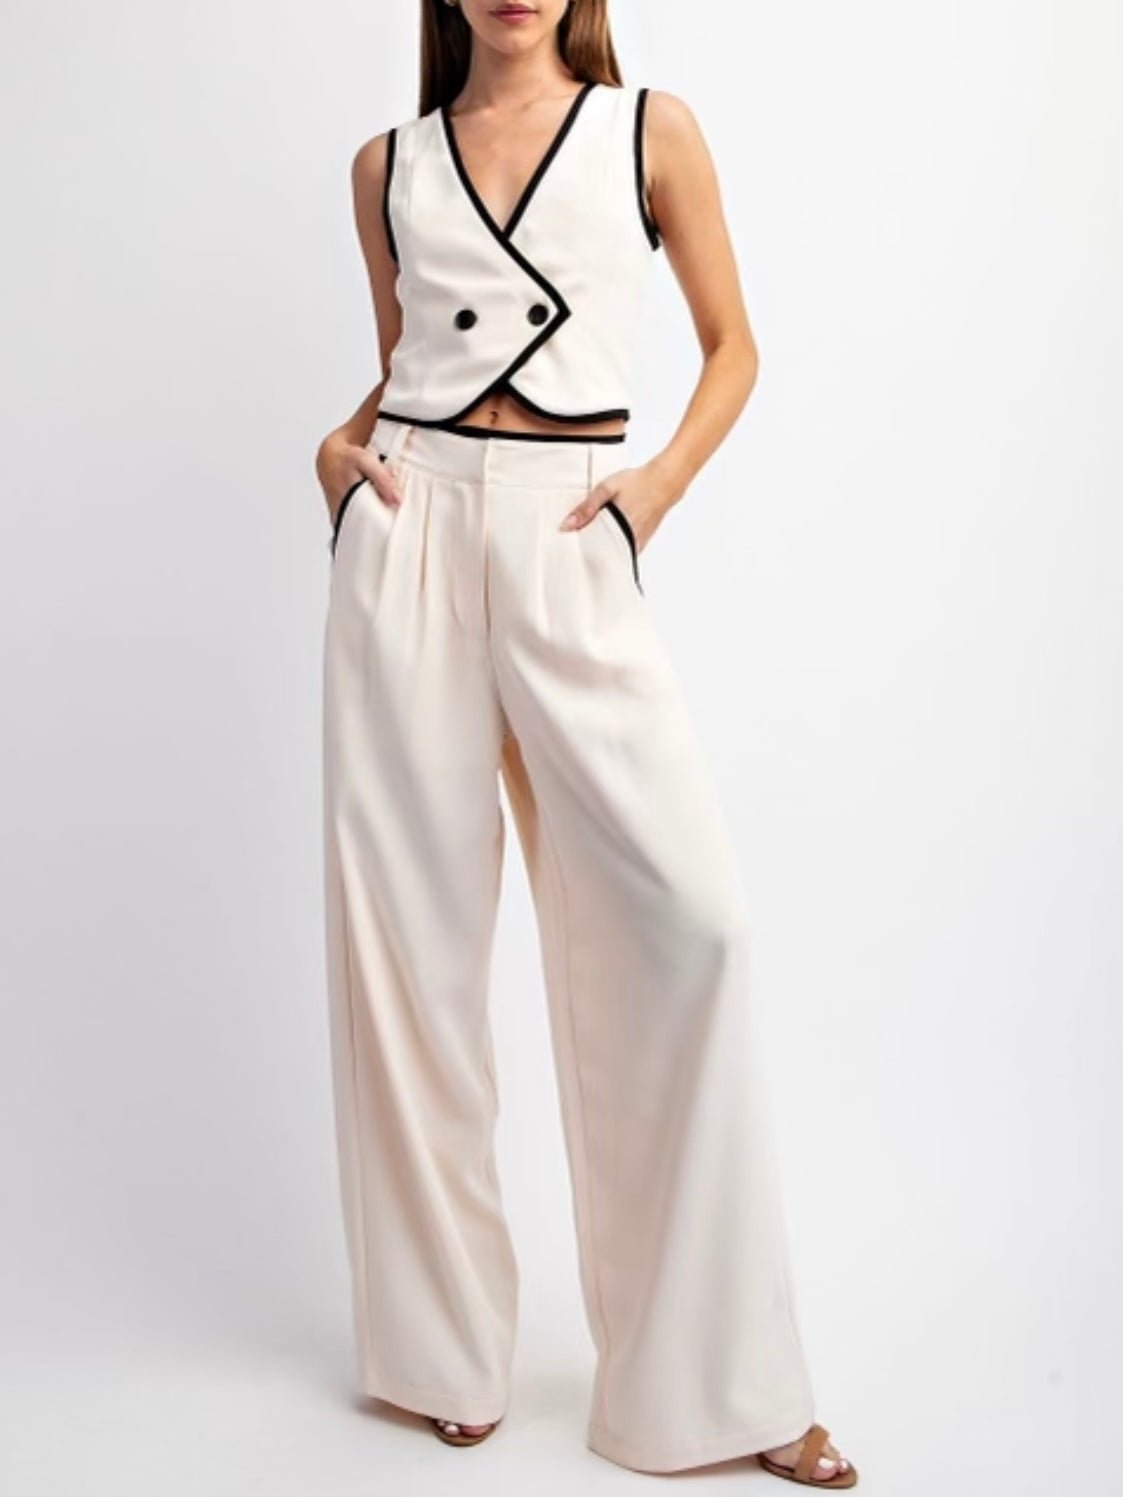 White and black contrast edge set of 2 vest top and pants - Wapas